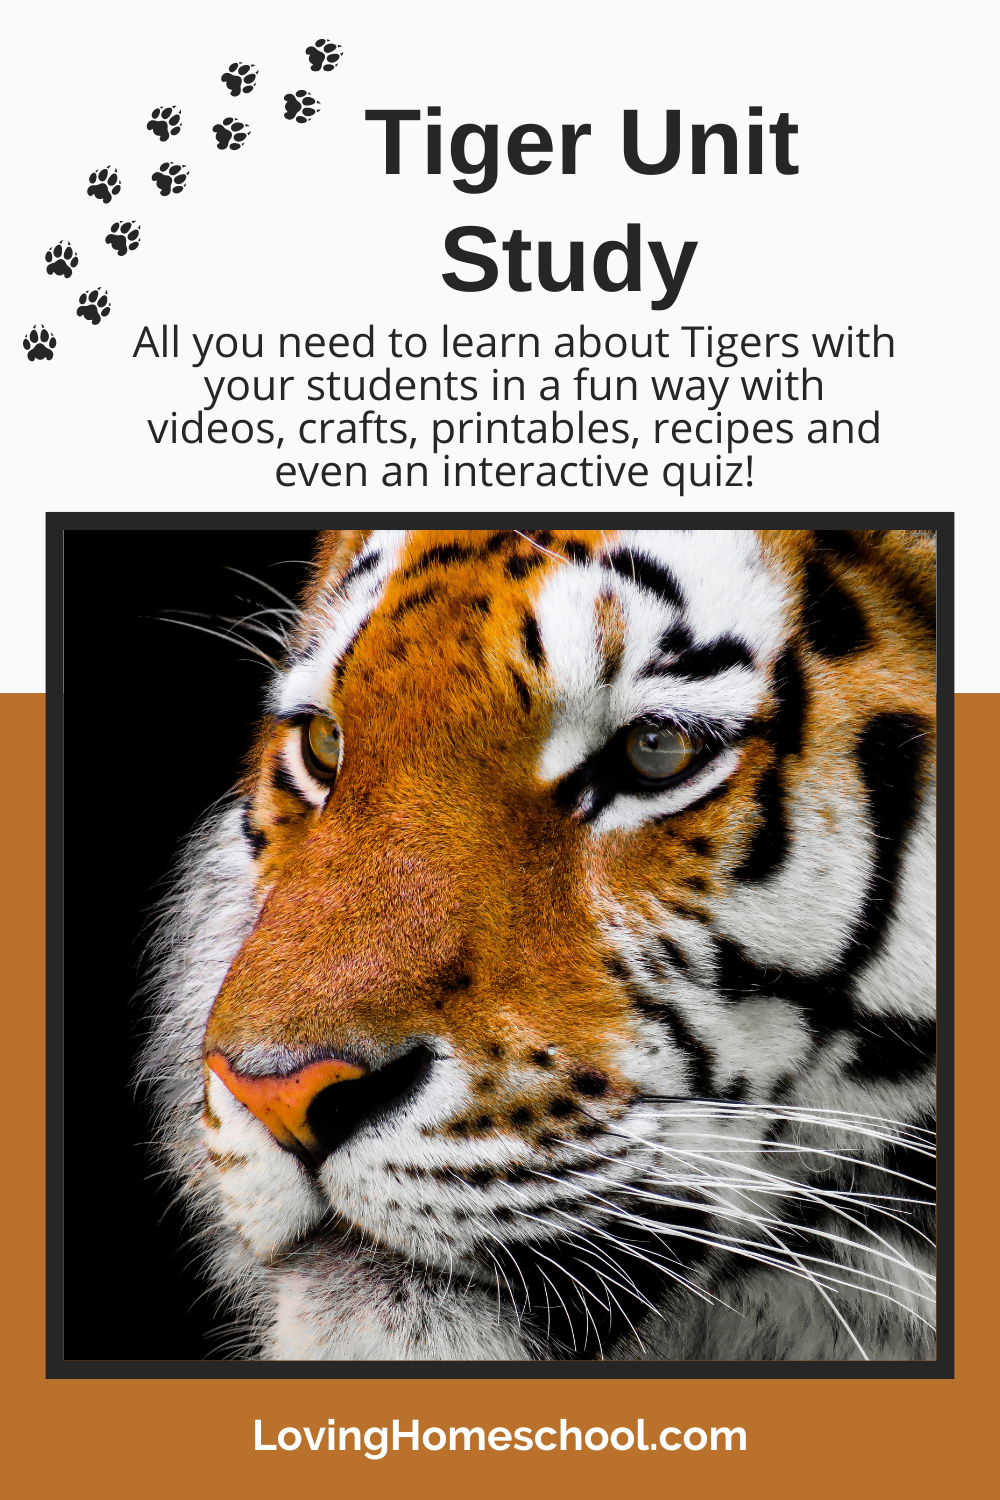 Tiger Unit Study Pinterest Pin